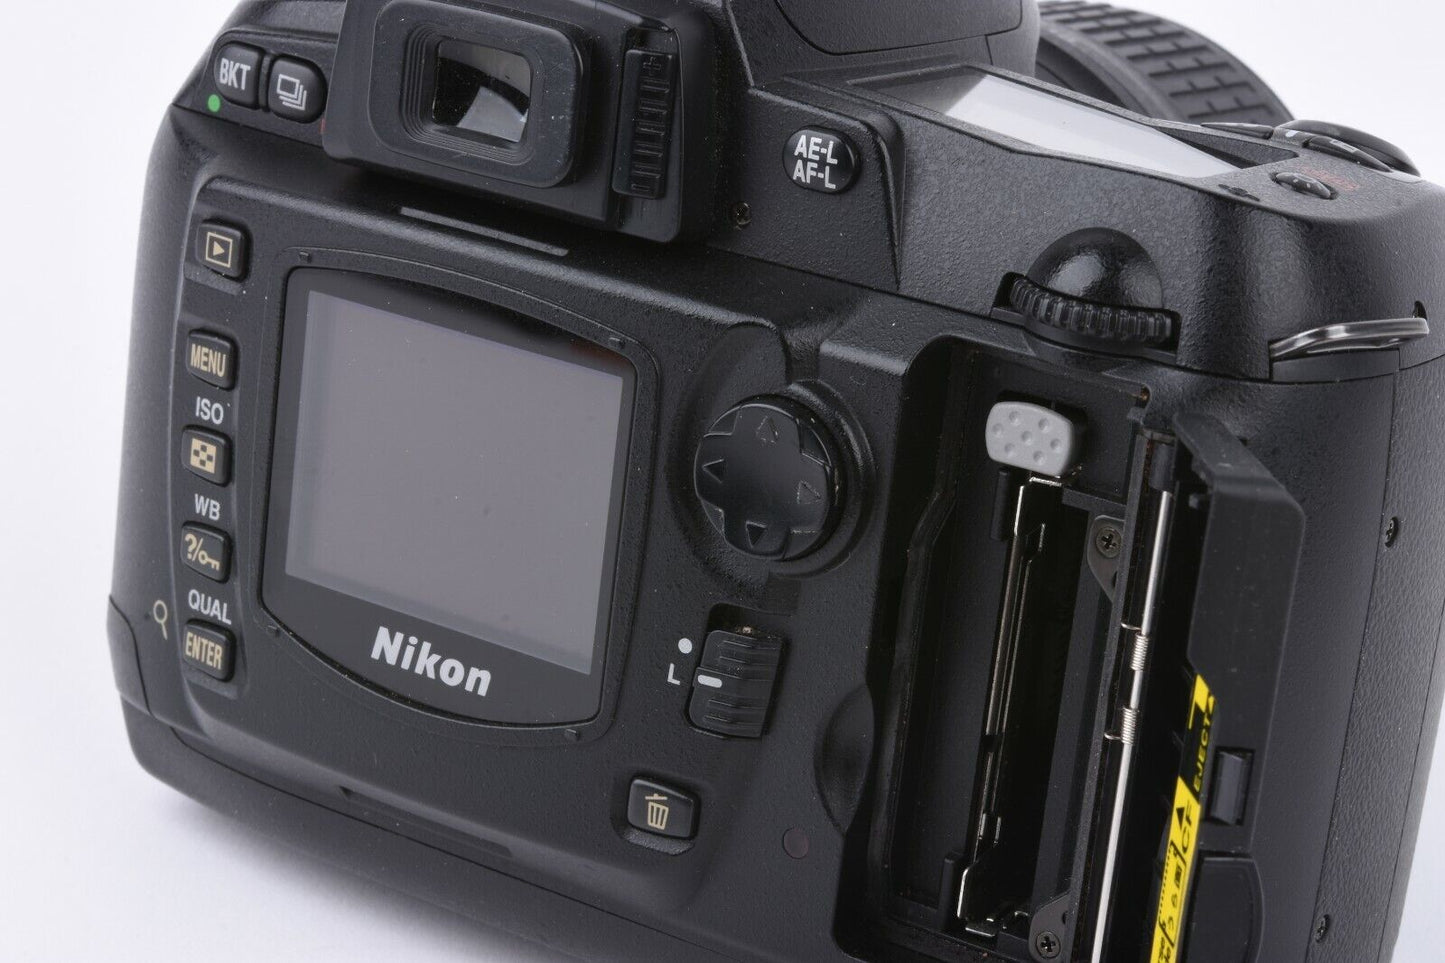 EXC++ NIKON D70 6.1MP DSLR w/18-55mm VR ZOOM, 2 BATTS+CHARGER+MANUAL+USB+CF CARD